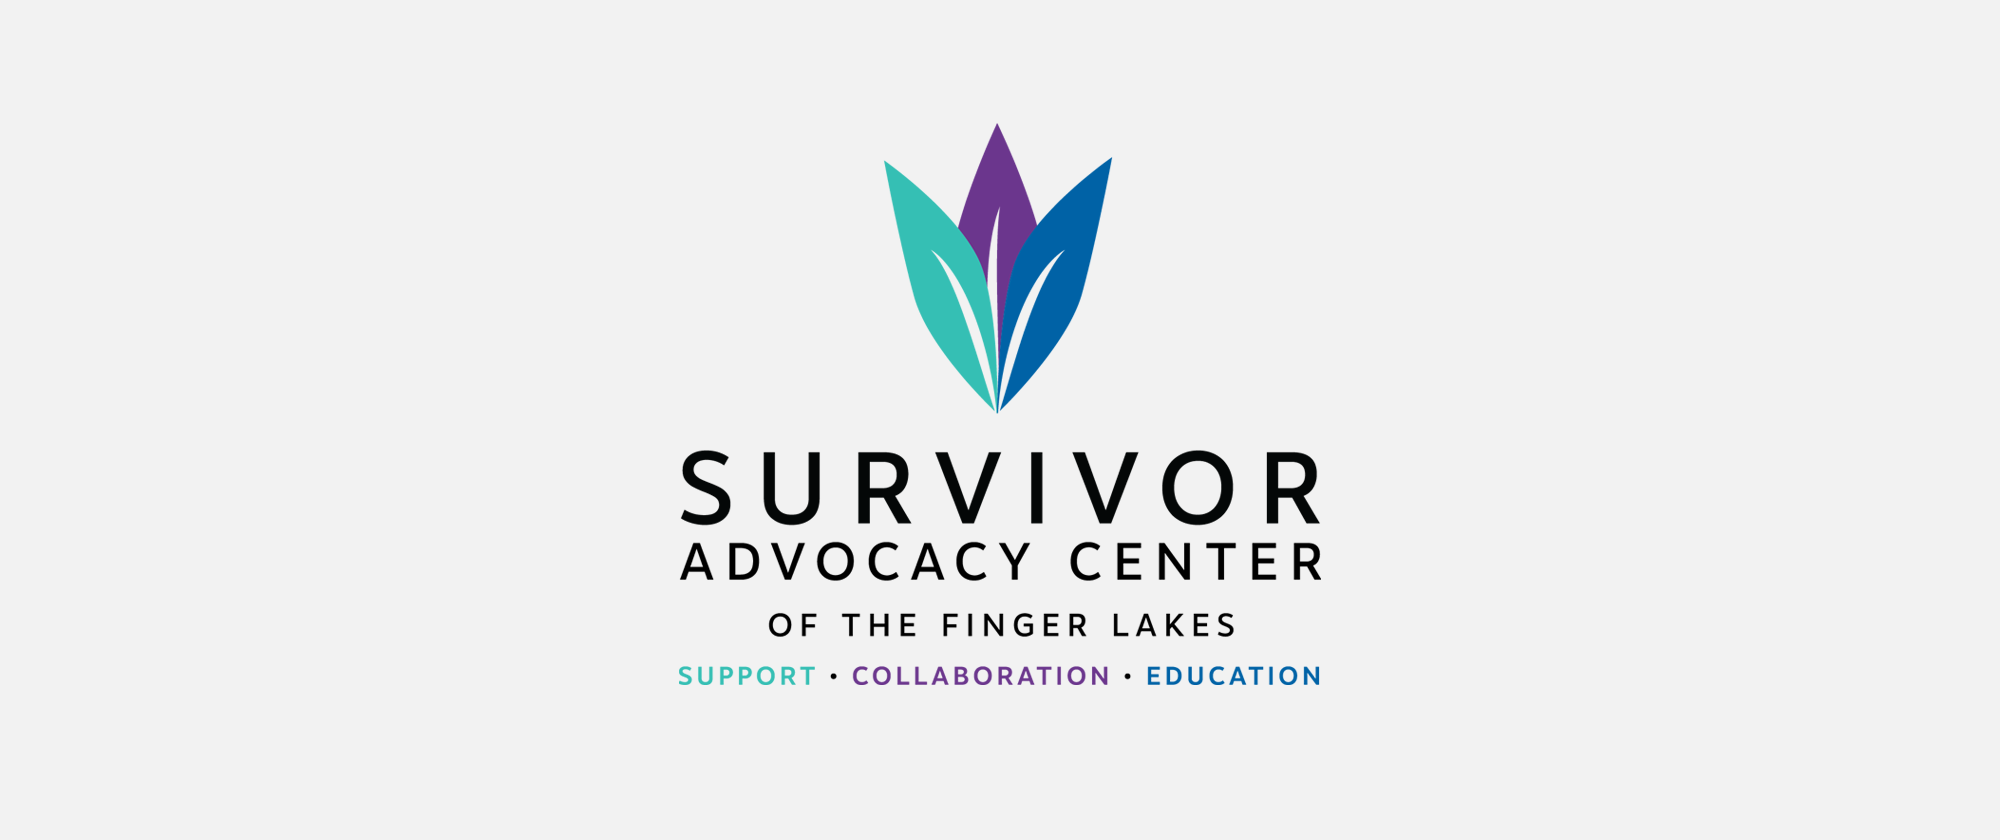 Survivor Advocacy Center Of The Finger Lakes Logo Home